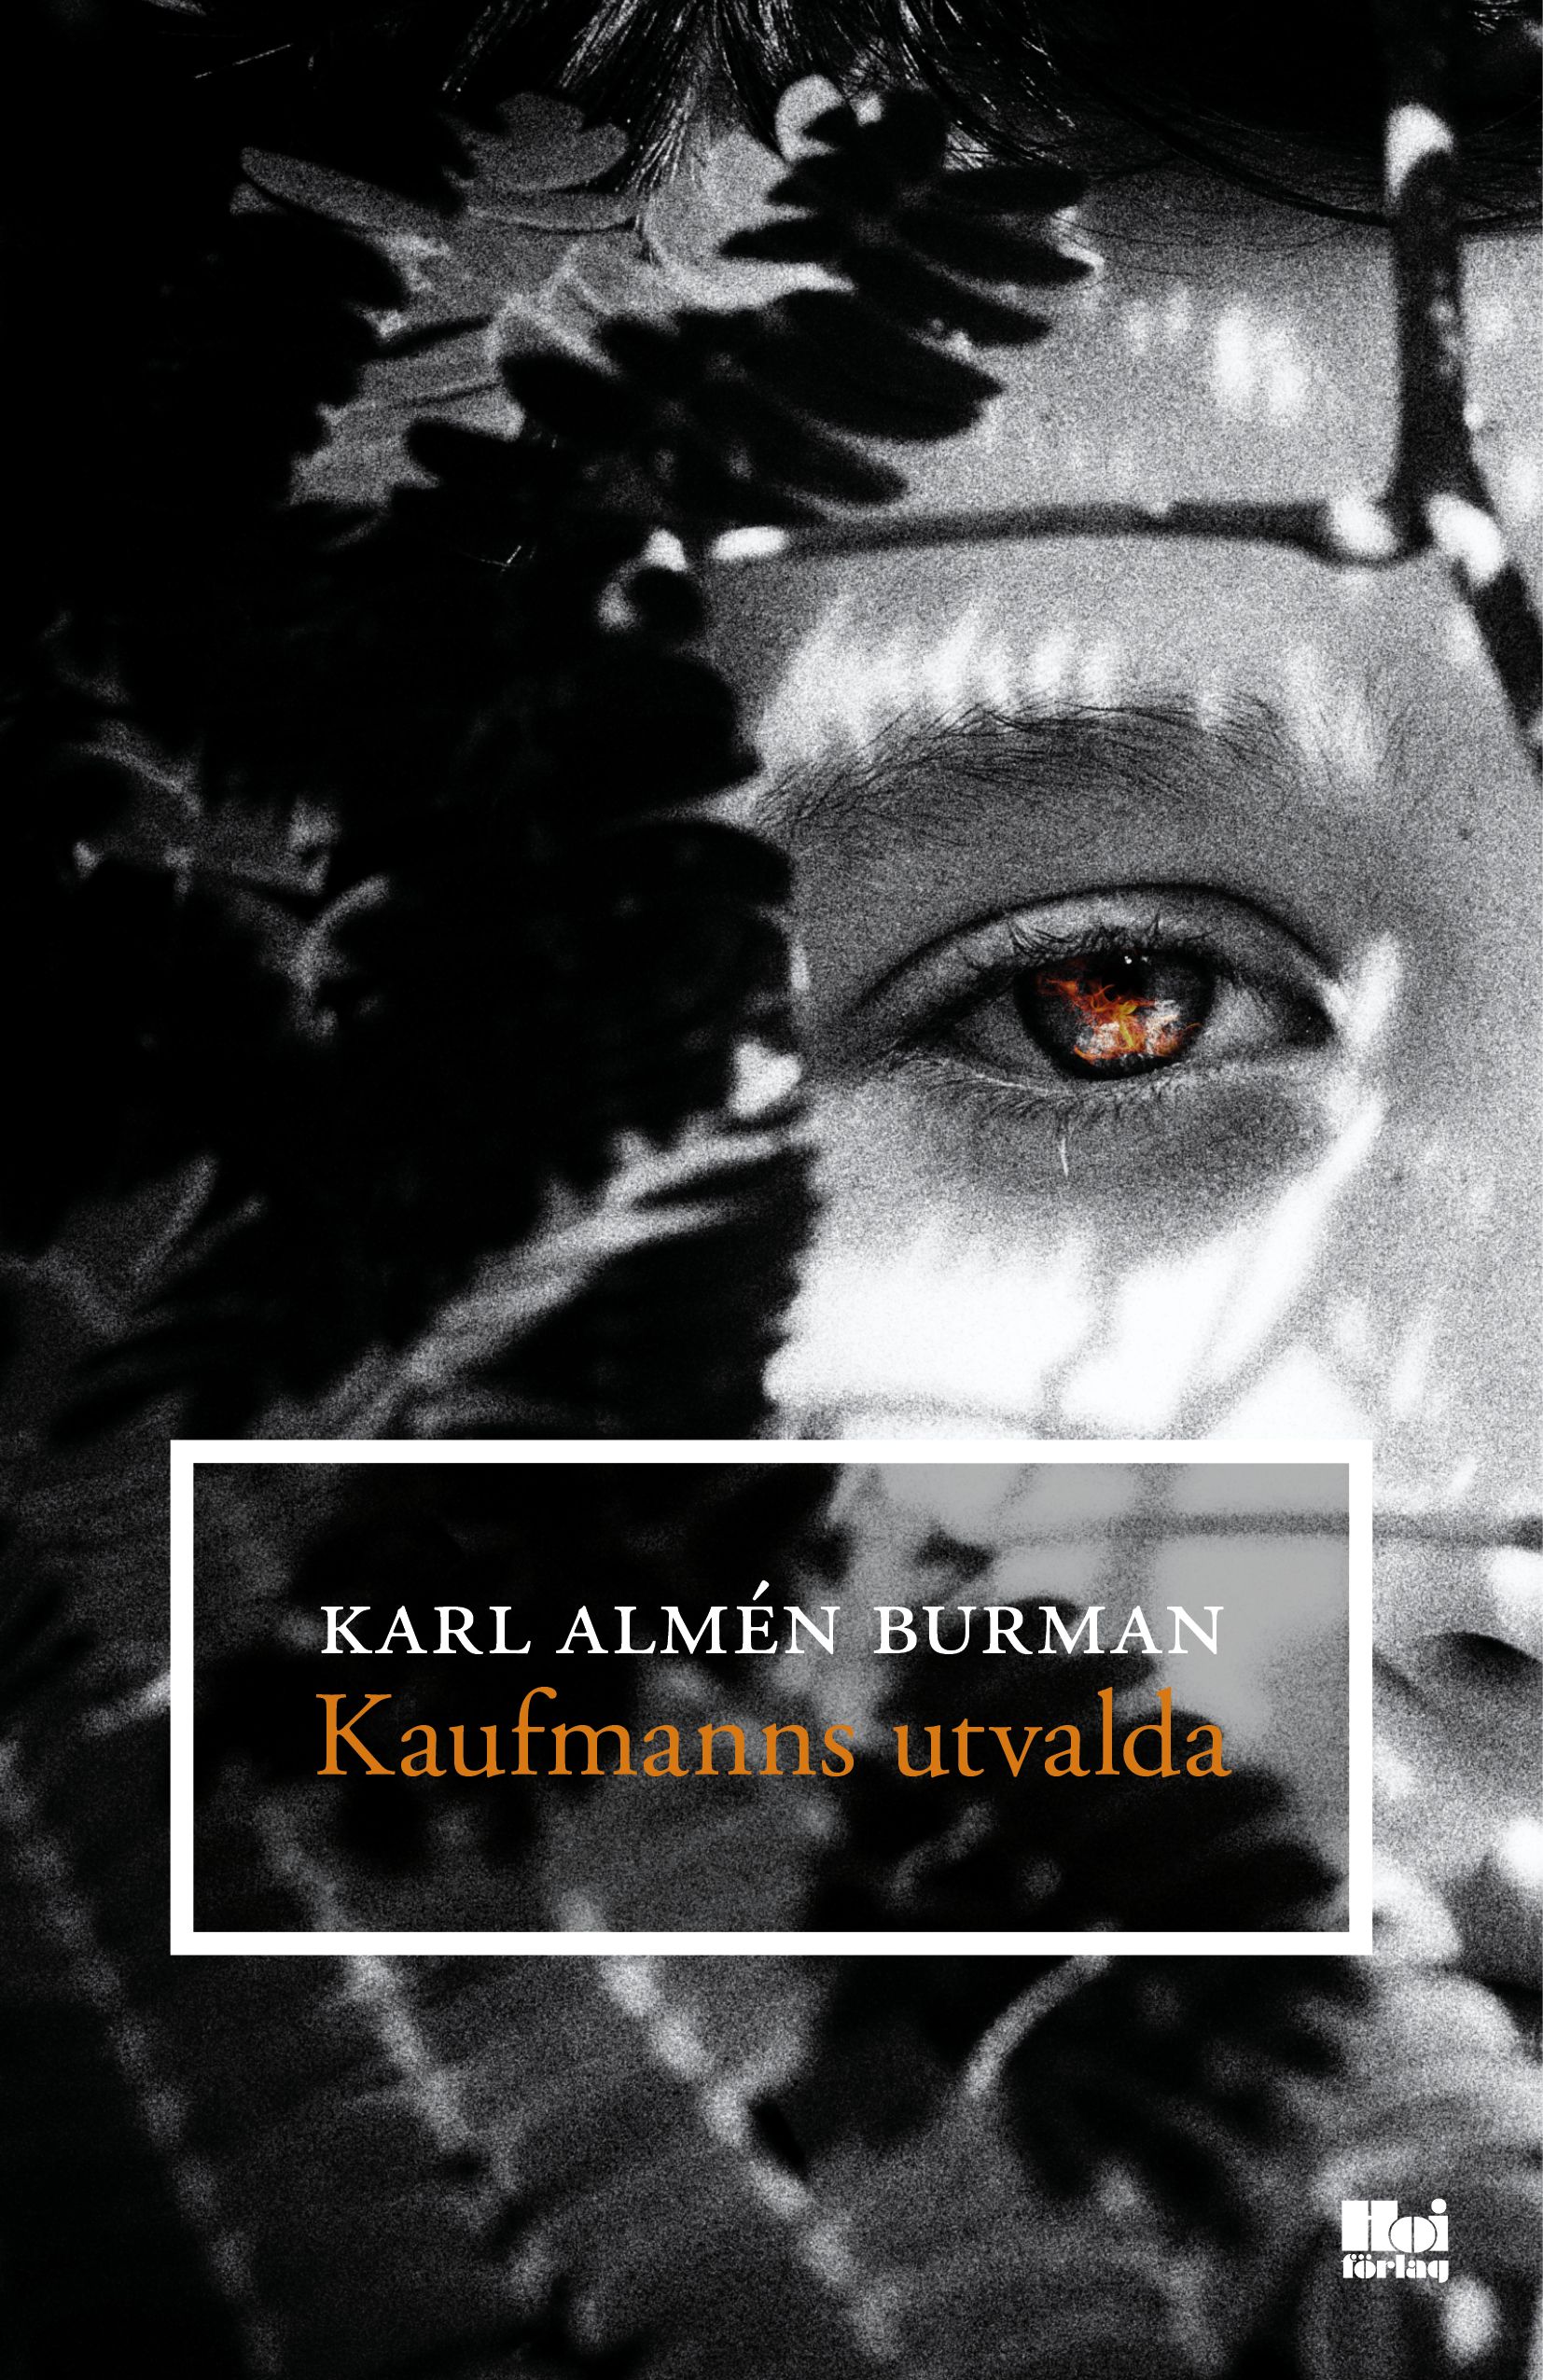 Kaufmanns utvalda, eBook by Karl Almén Burman